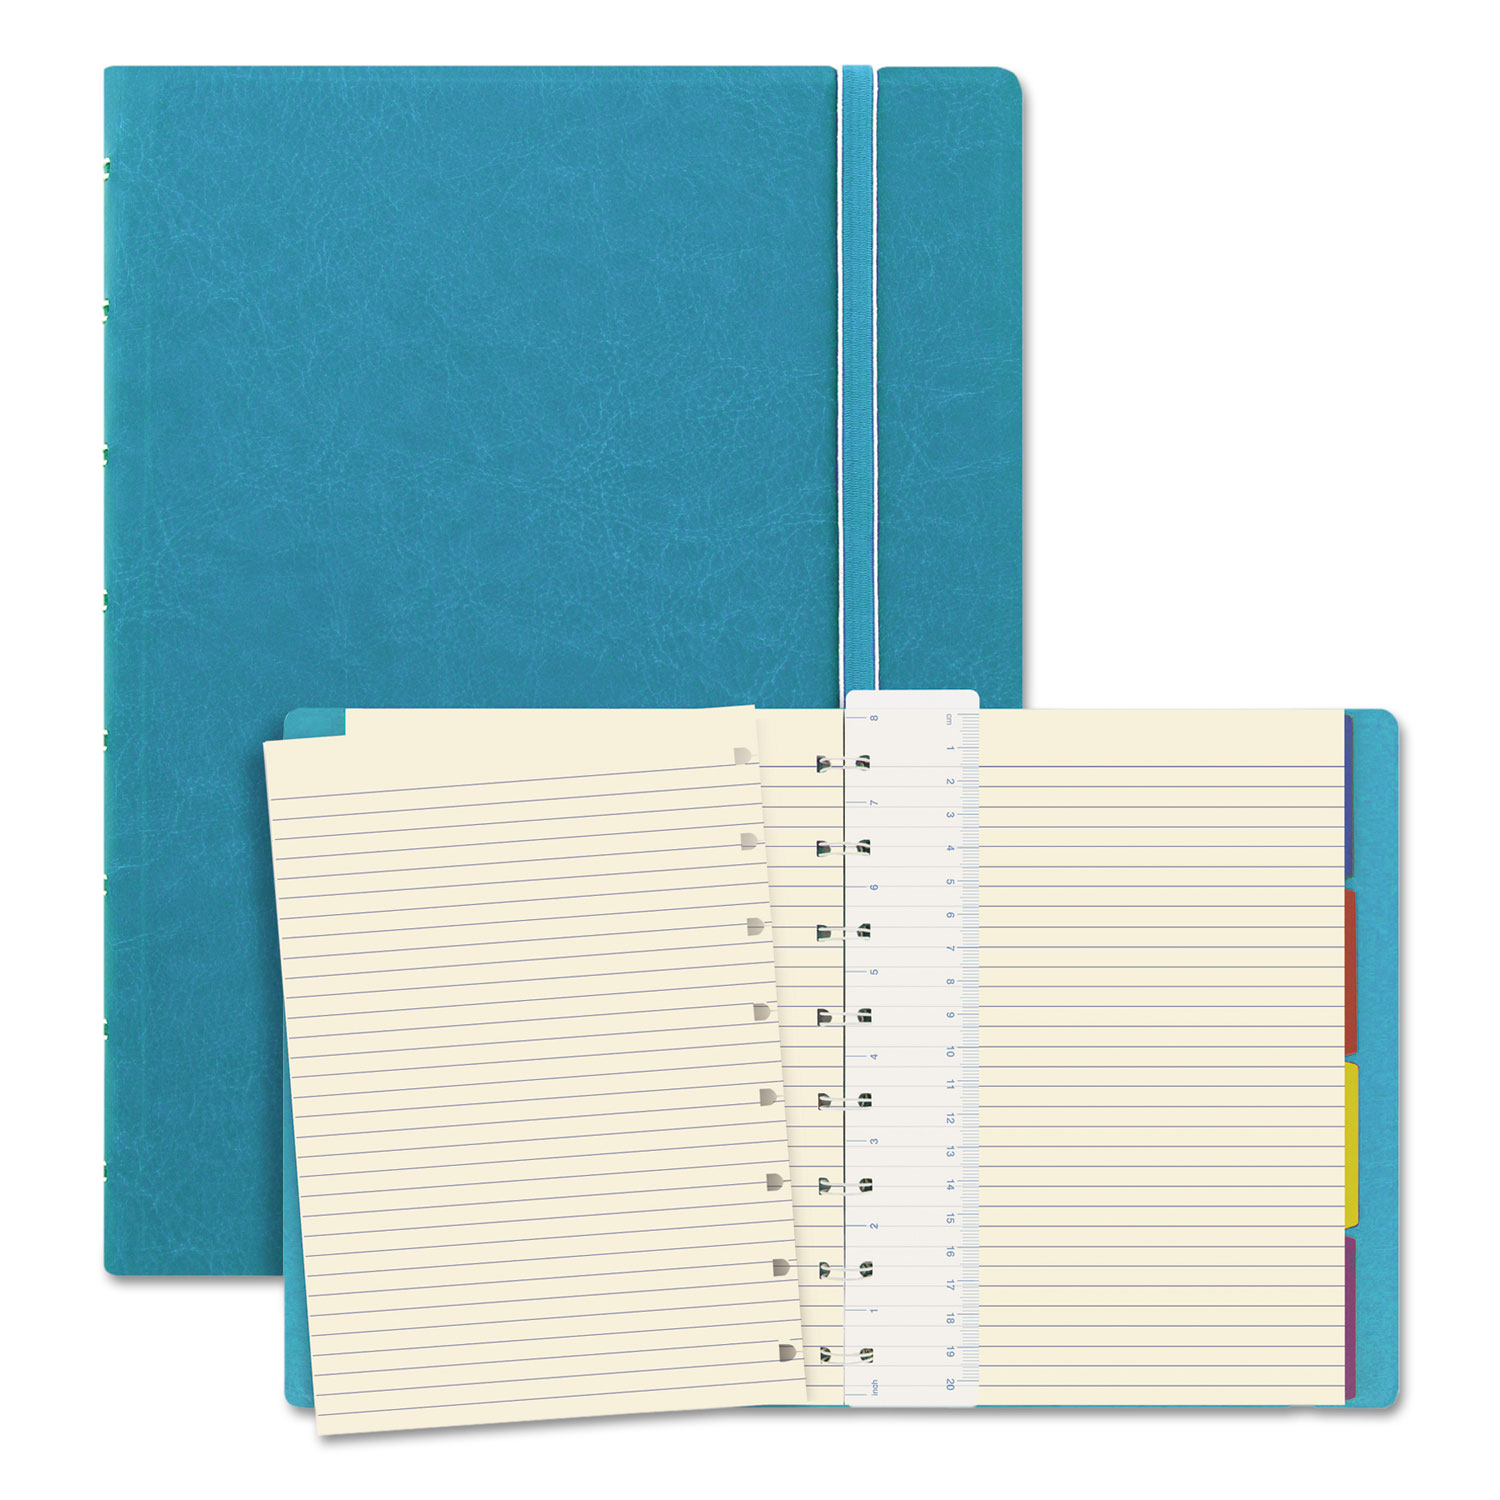  Filofax B115012U Notebook, 1 Subject, Medium/College Rule, Aqua Cover, 8.25 x 5.81, 112 Sheets (REDB115012U) 